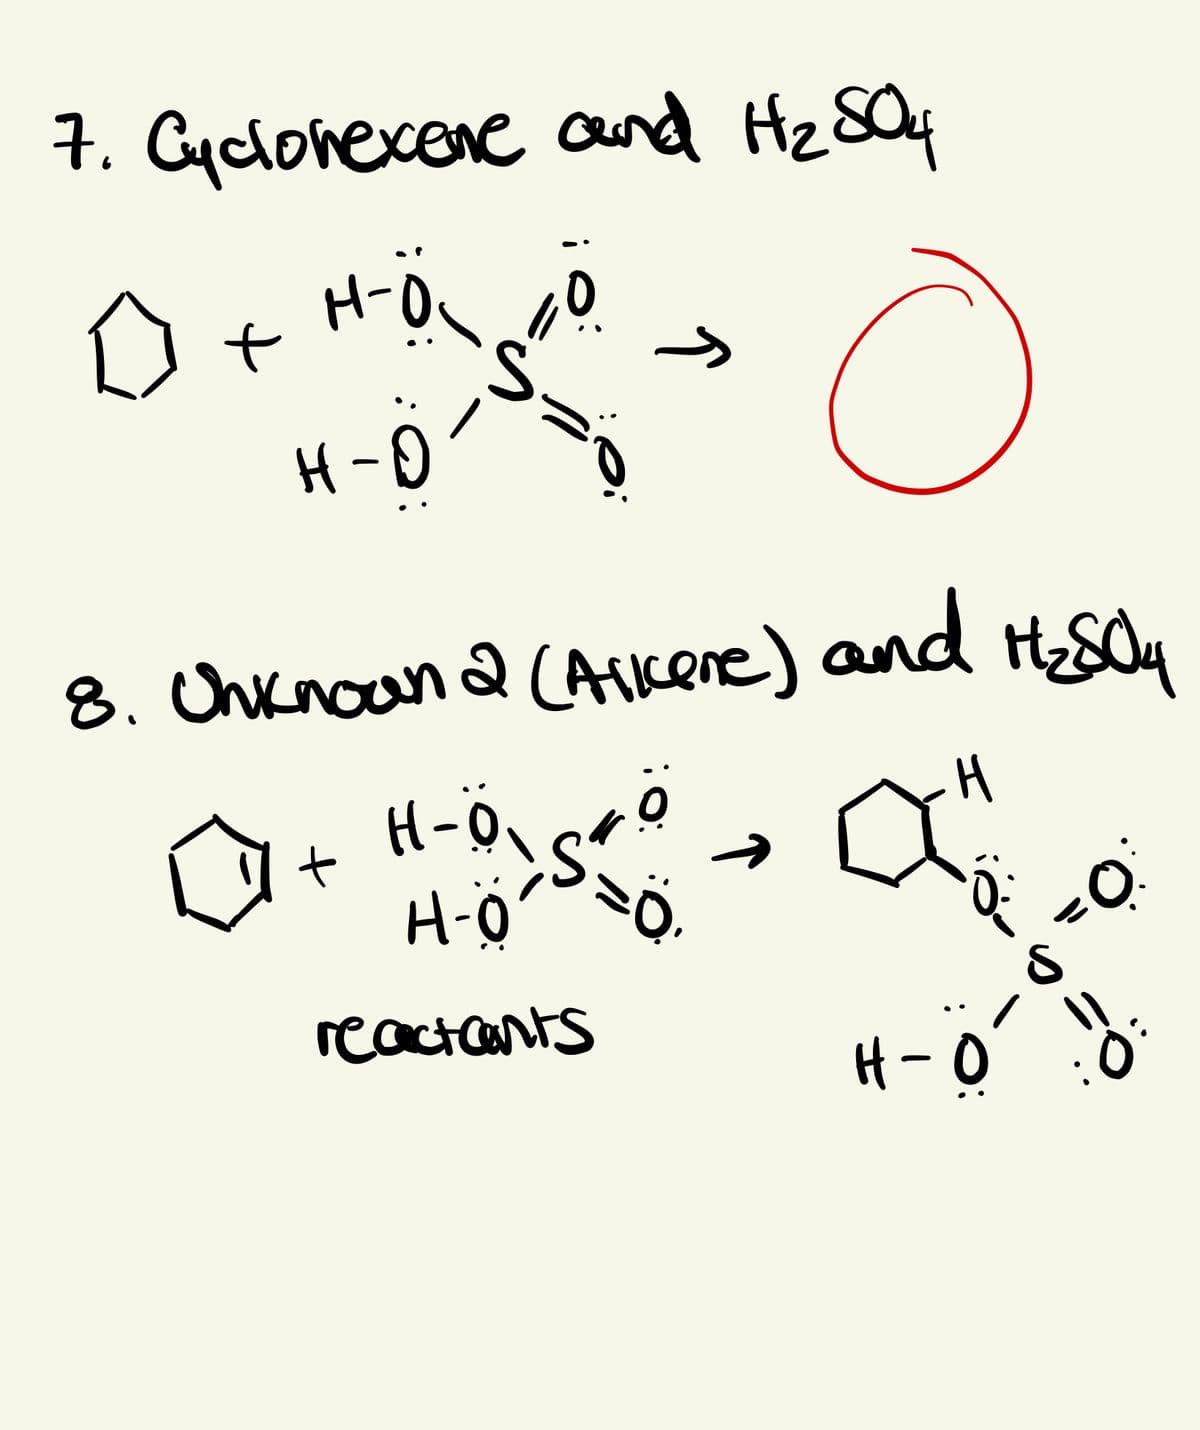 7. Cyclonexere and Hz SQ4
H-Q
8. Chknoan 2 (Aikene) and H&Oy
+ H-ö.
H-ö
->
reactants
H-0
↑
